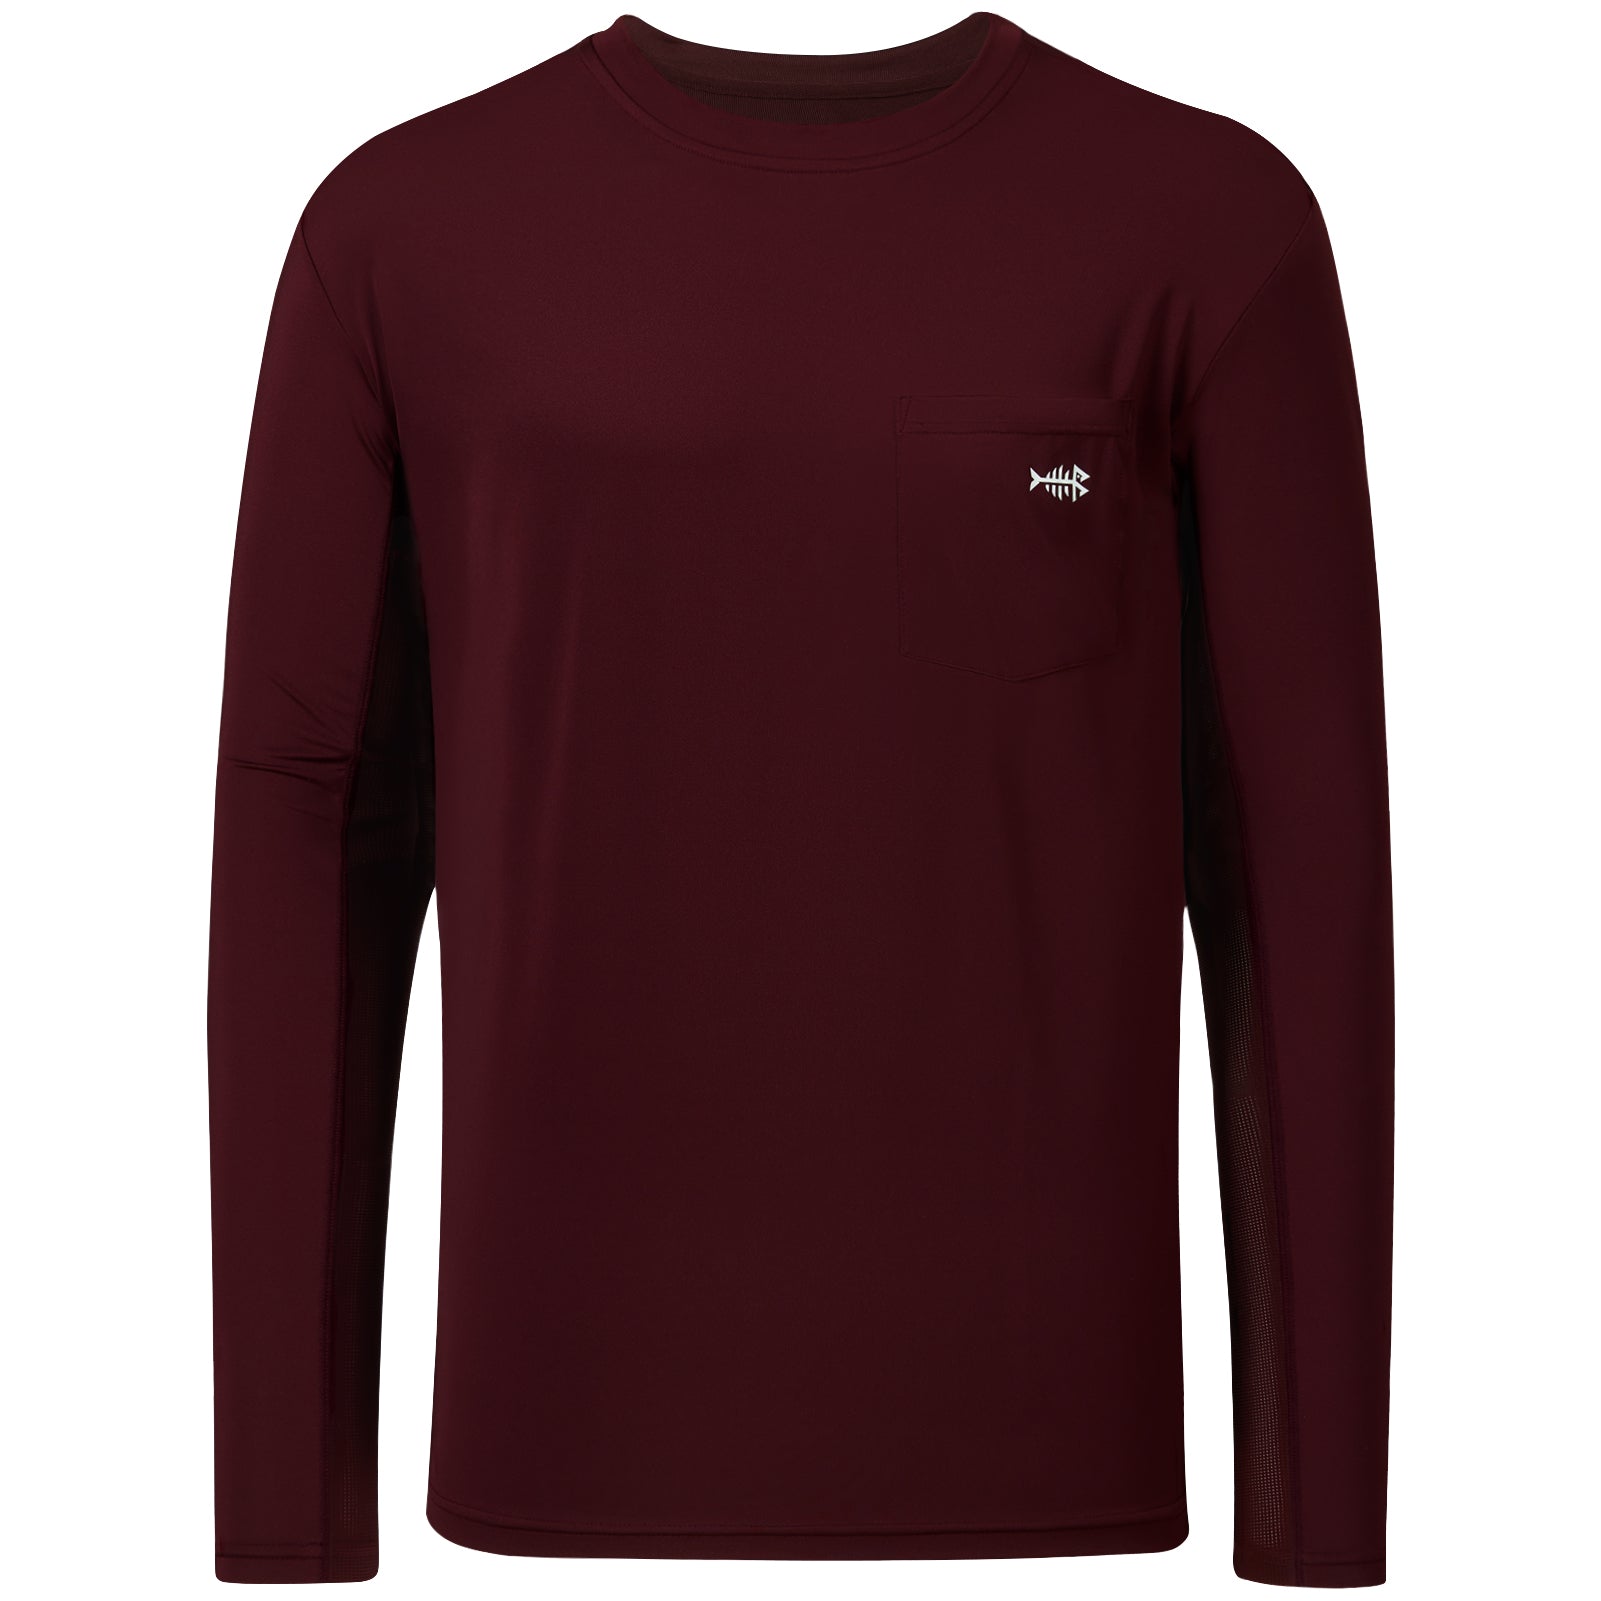 Bassdash Men's UPF 50+ Fishing Shirt Long Sleeve Sun Protection Performance Shirt For Outdoor Sports, Coral Red/Dark Grey Logo / L